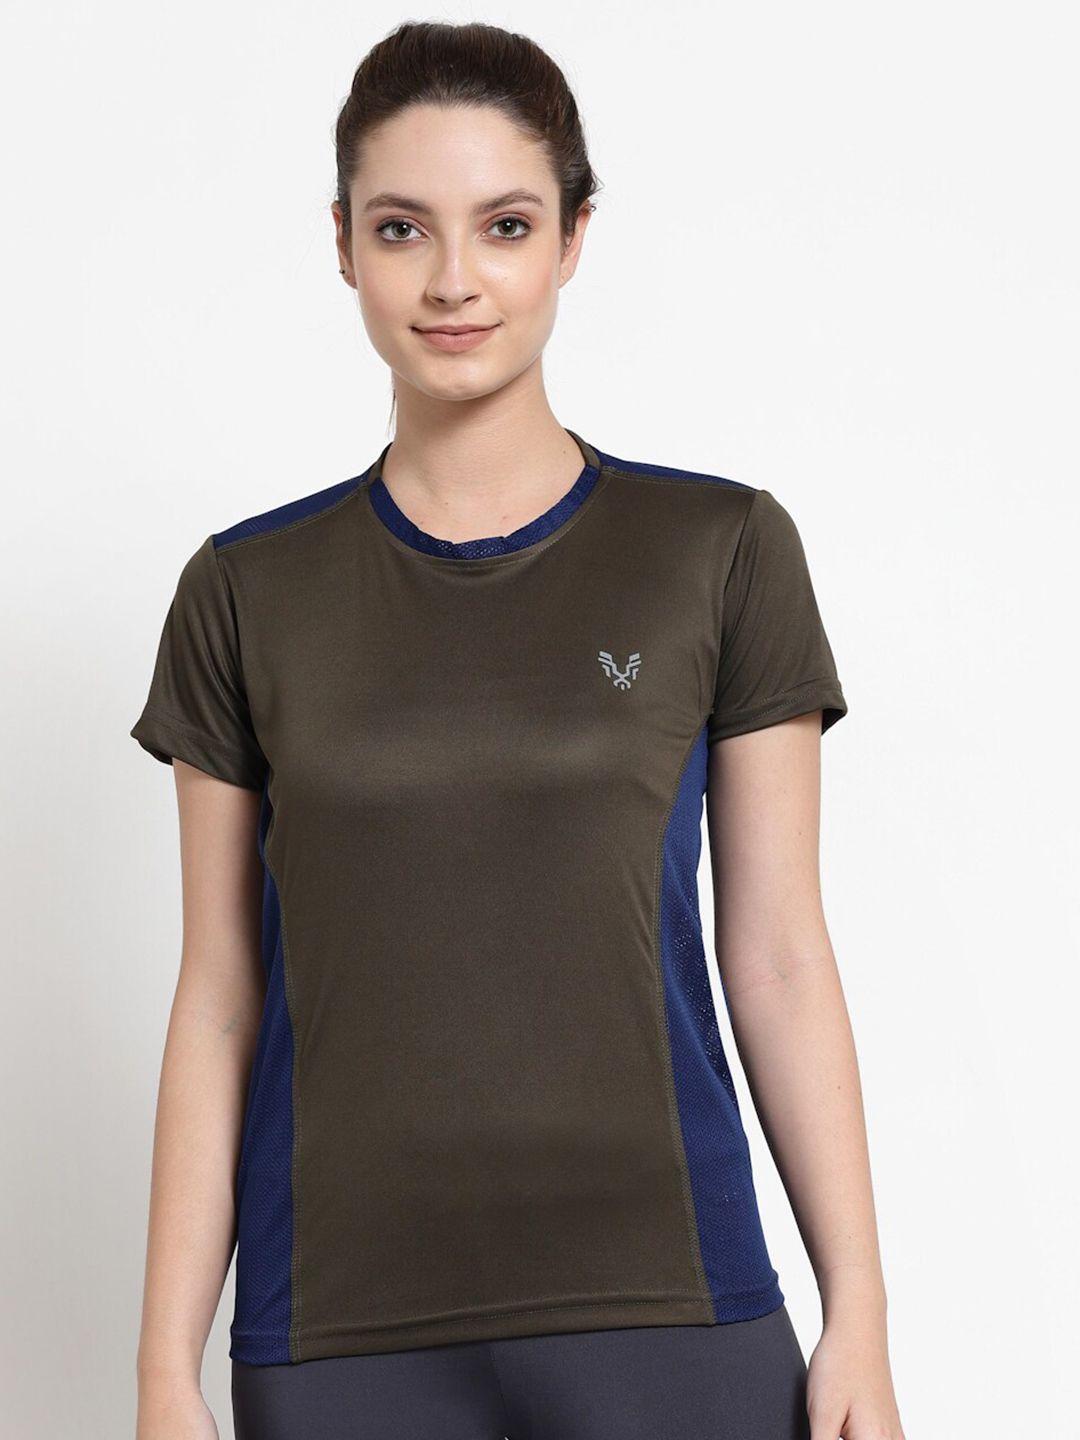 uzarus-raglan-sleeves-dry-fit-technology-sports-t-shirt